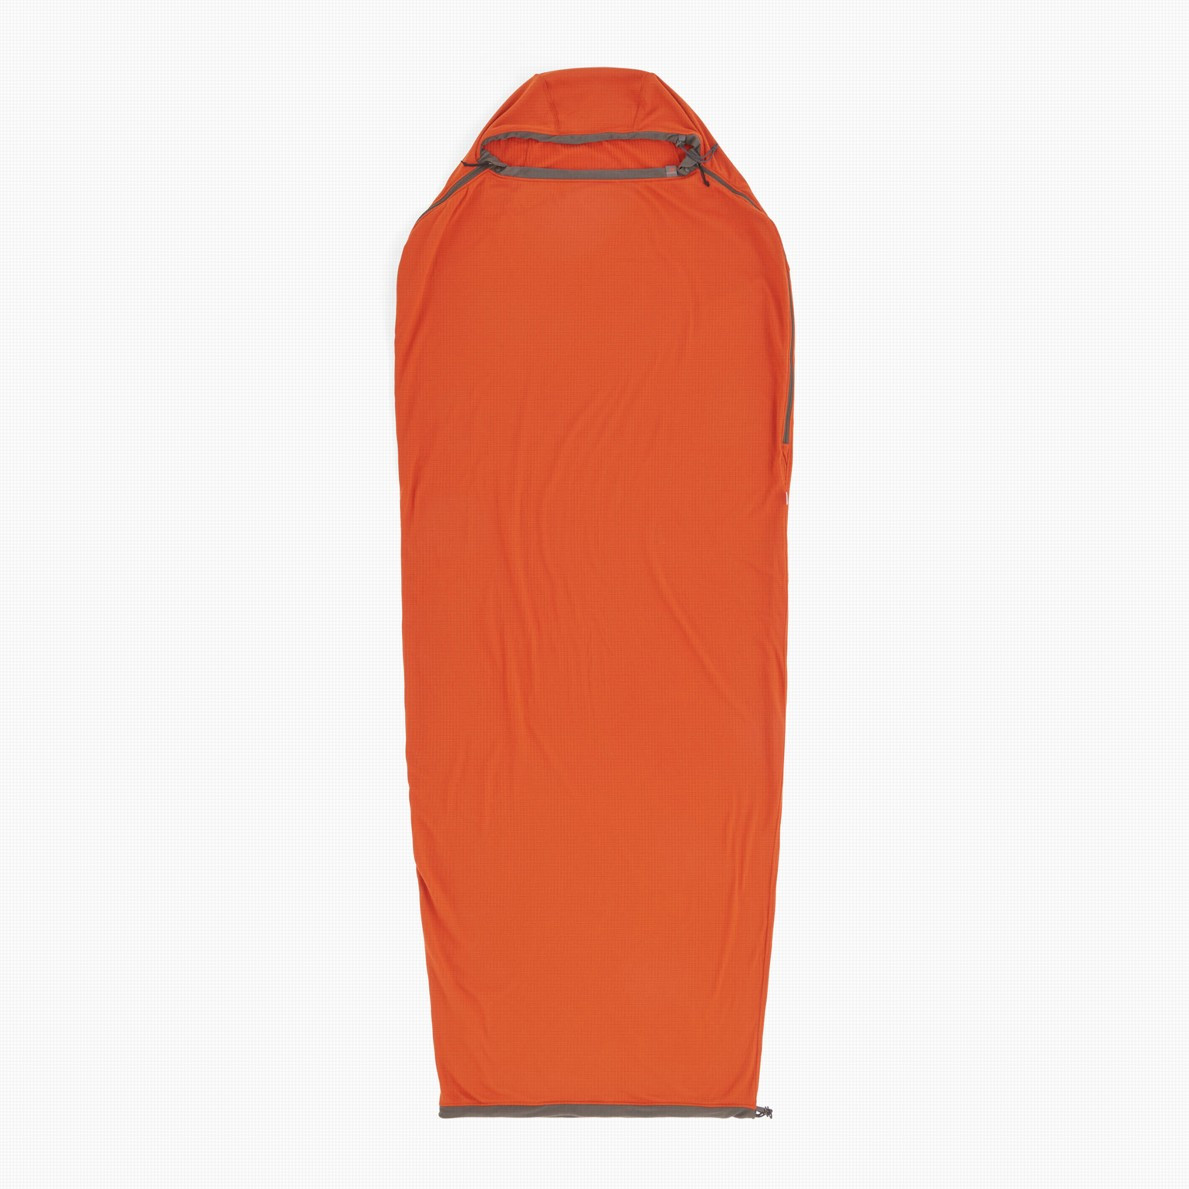 Vložka do spacáku Sea to Summit Reactor Fleece Liner Mummy Compact Barva: červená/oranžová